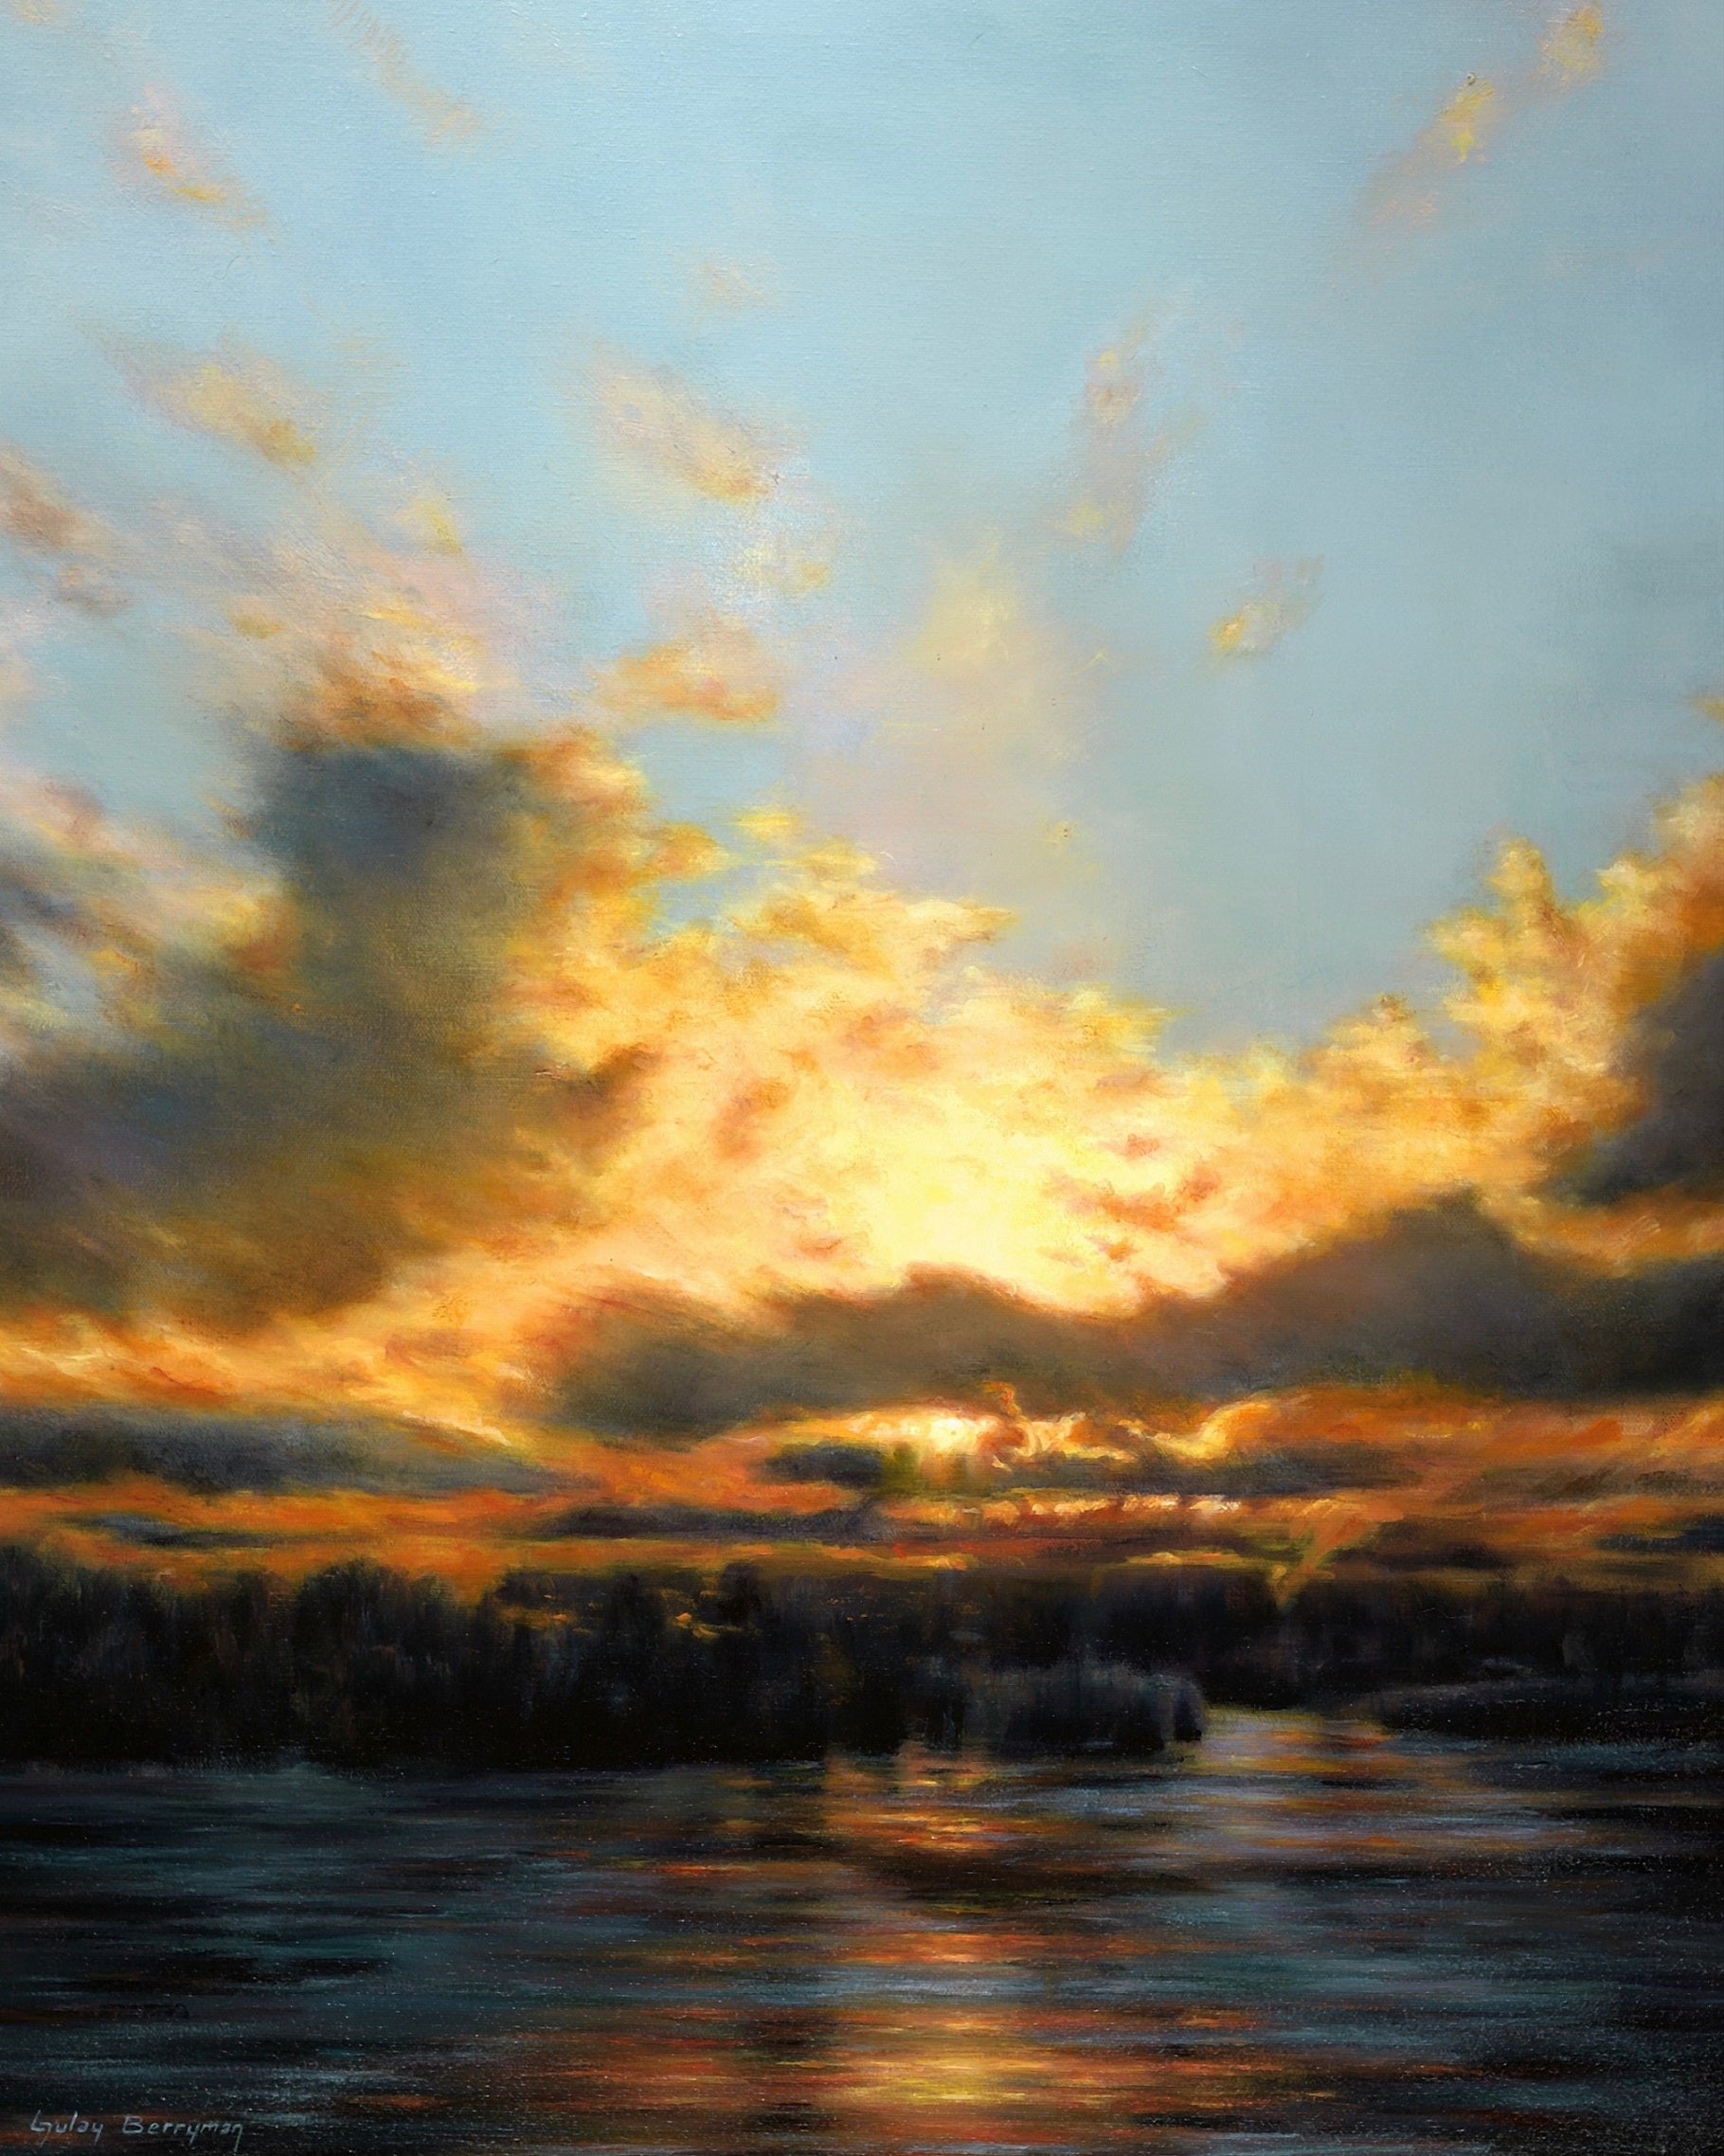 Gulay Berryman - James River Sunset